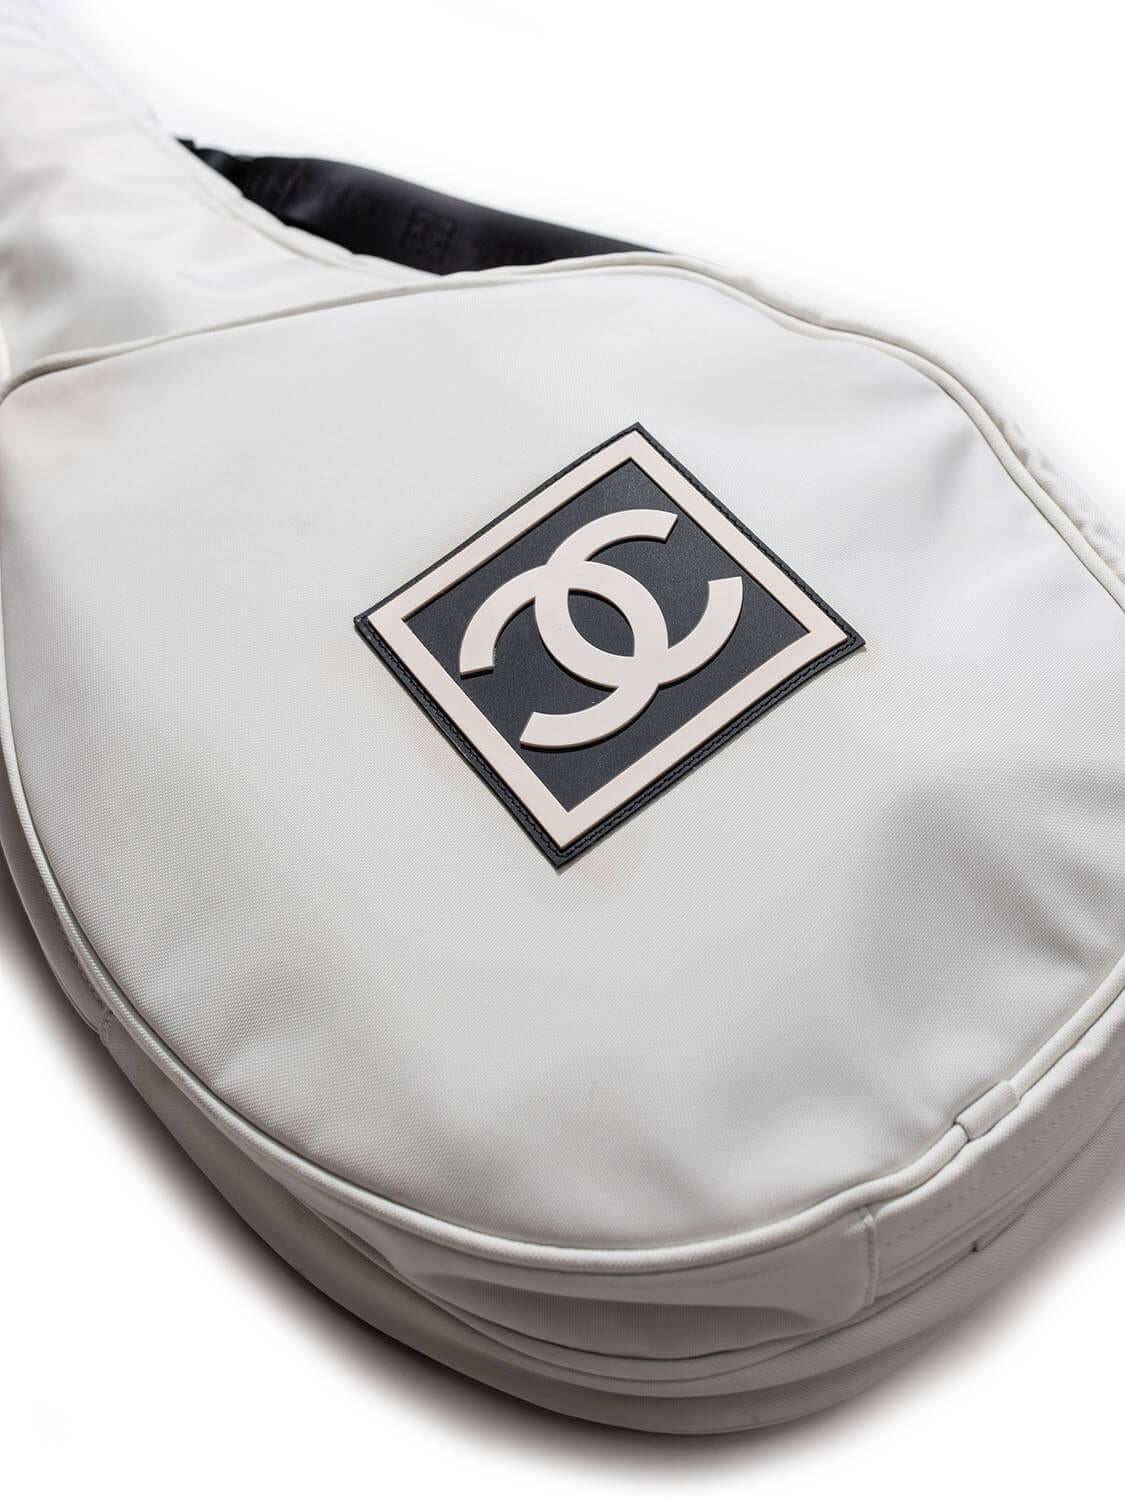 Chanel Canvas Tennis Racquet Cover White Nylon Sport Bag In Good Condition For Sale In Miami, FL